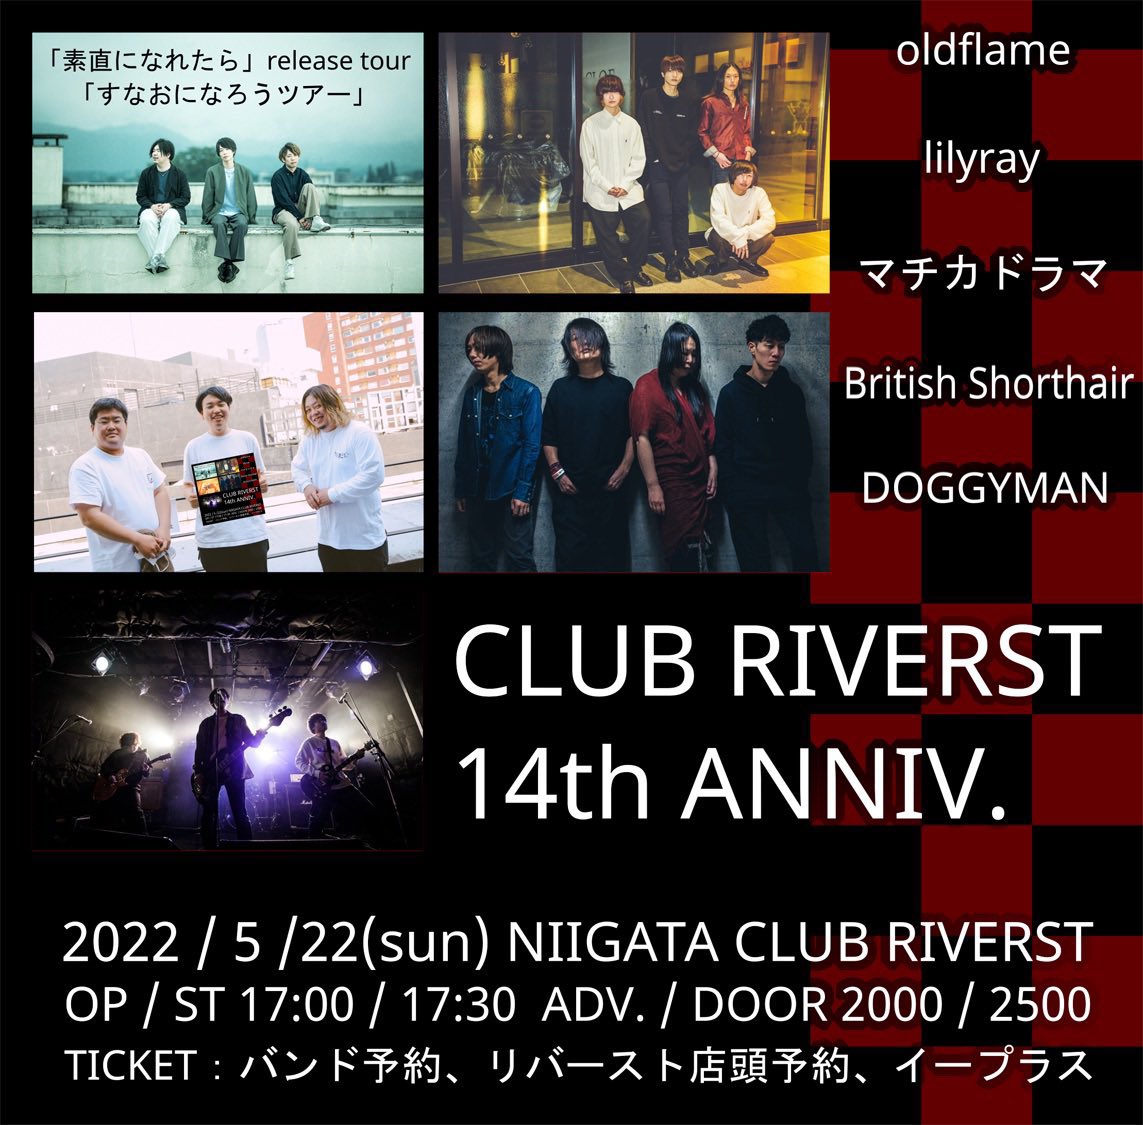 【CLUB RIVERST 14th ANNIV.】～oldflame digital mini album「素直になれたら」release「すなおになろうツアー」